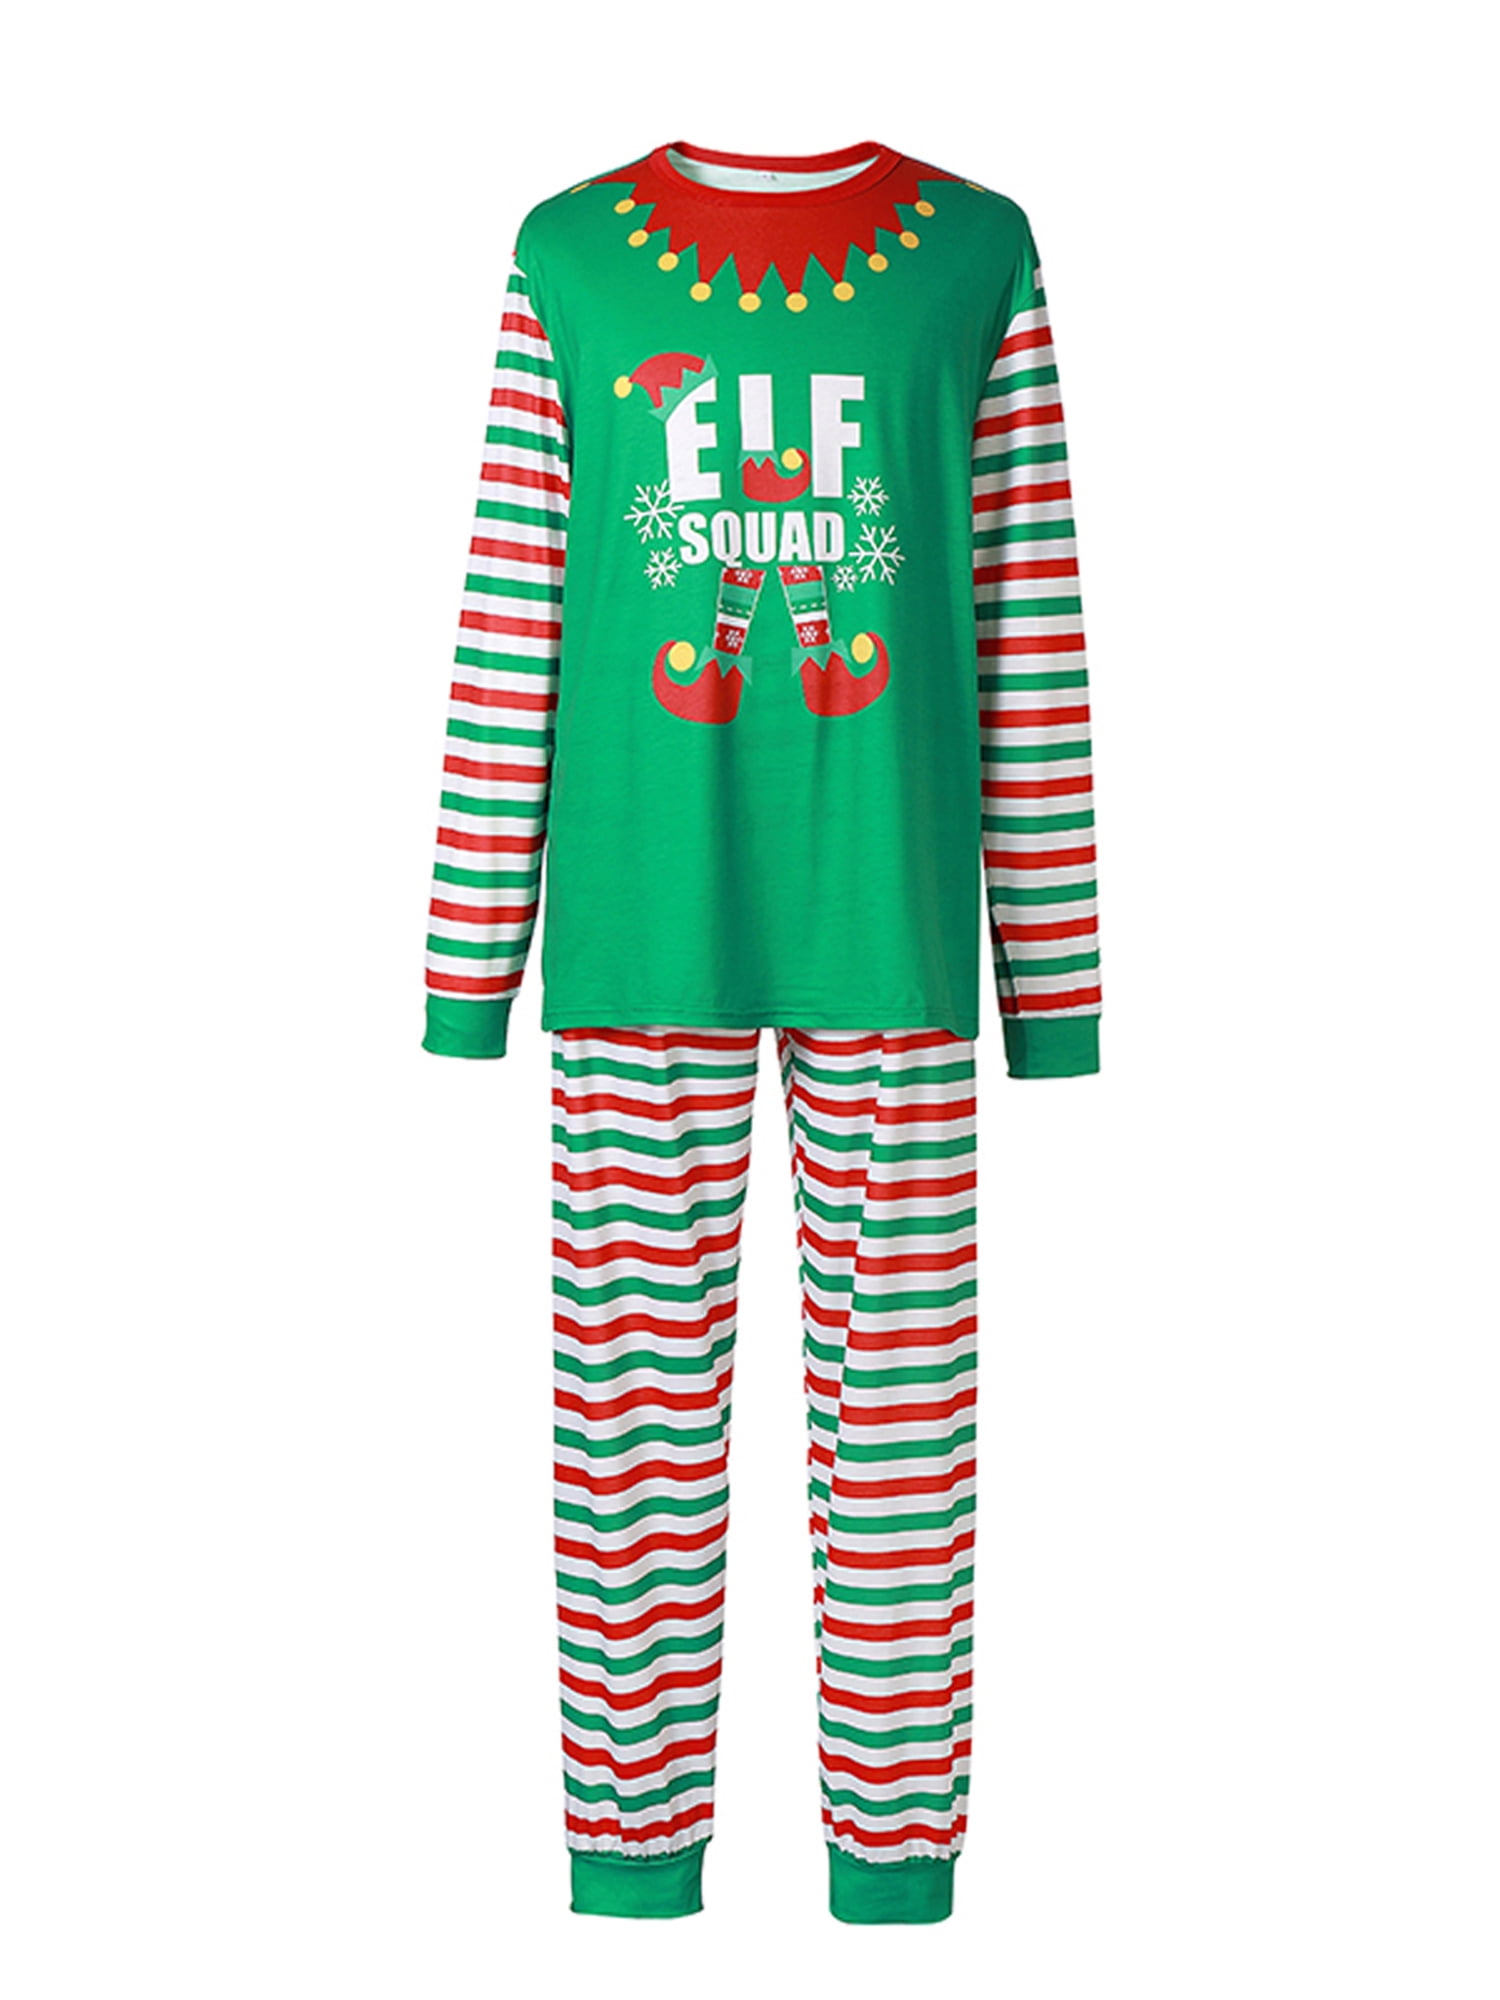 Details about   Pyjama Family Matching Clothes Christmas Pajamas Set Women Baby Kids Elf 